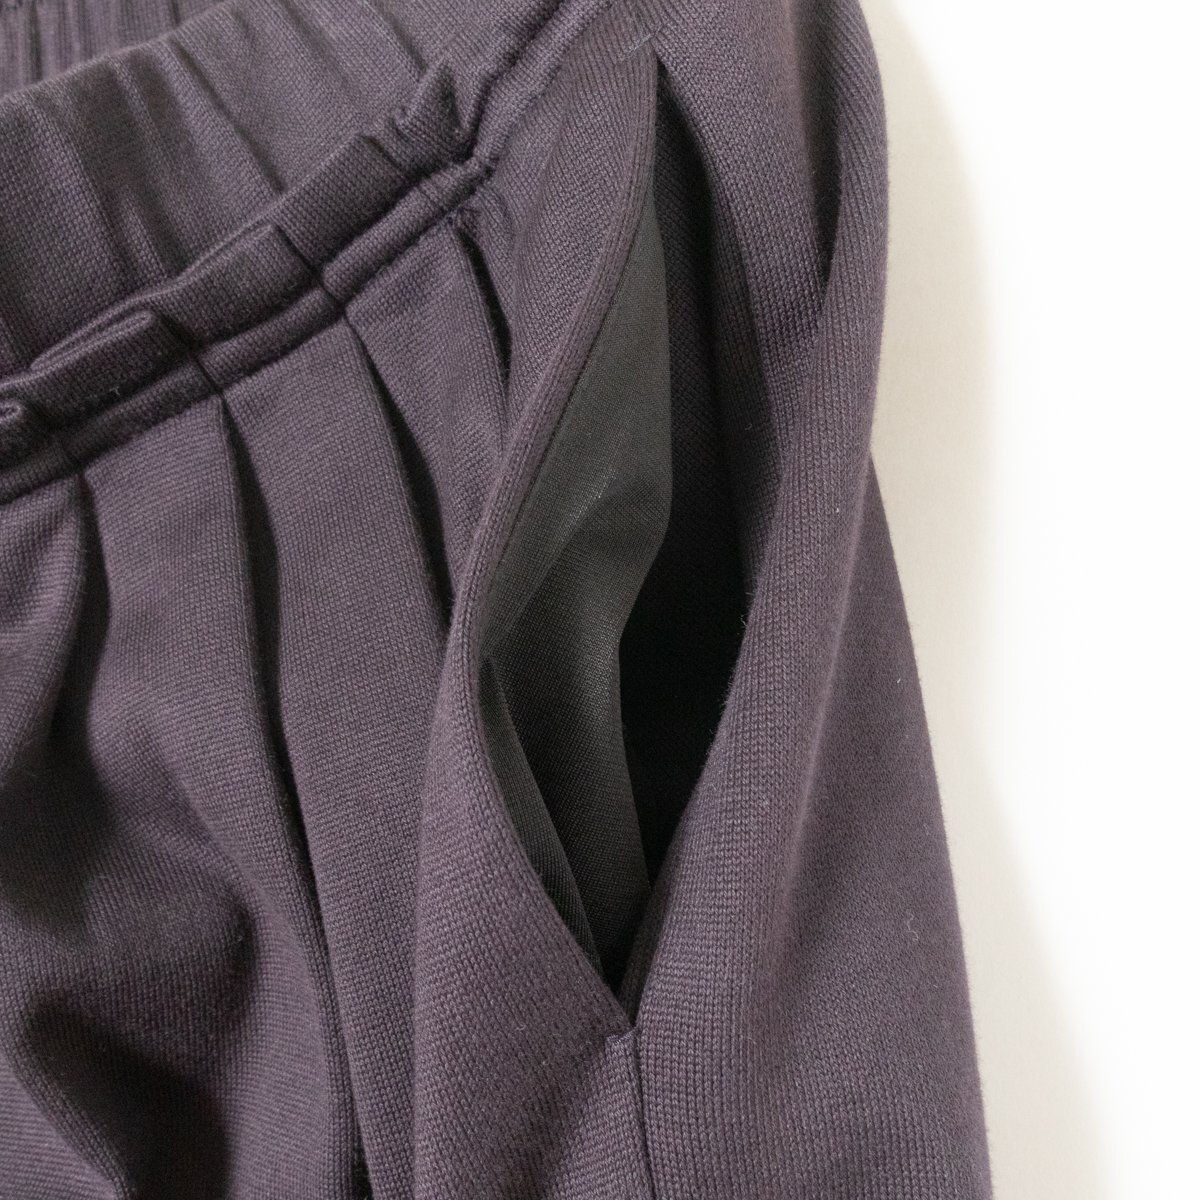 NEMIKA by leiliannemika Leilian made in Japan wide pants waist rubber sweat material plain 0 cotton 100% charcoal casual simple 